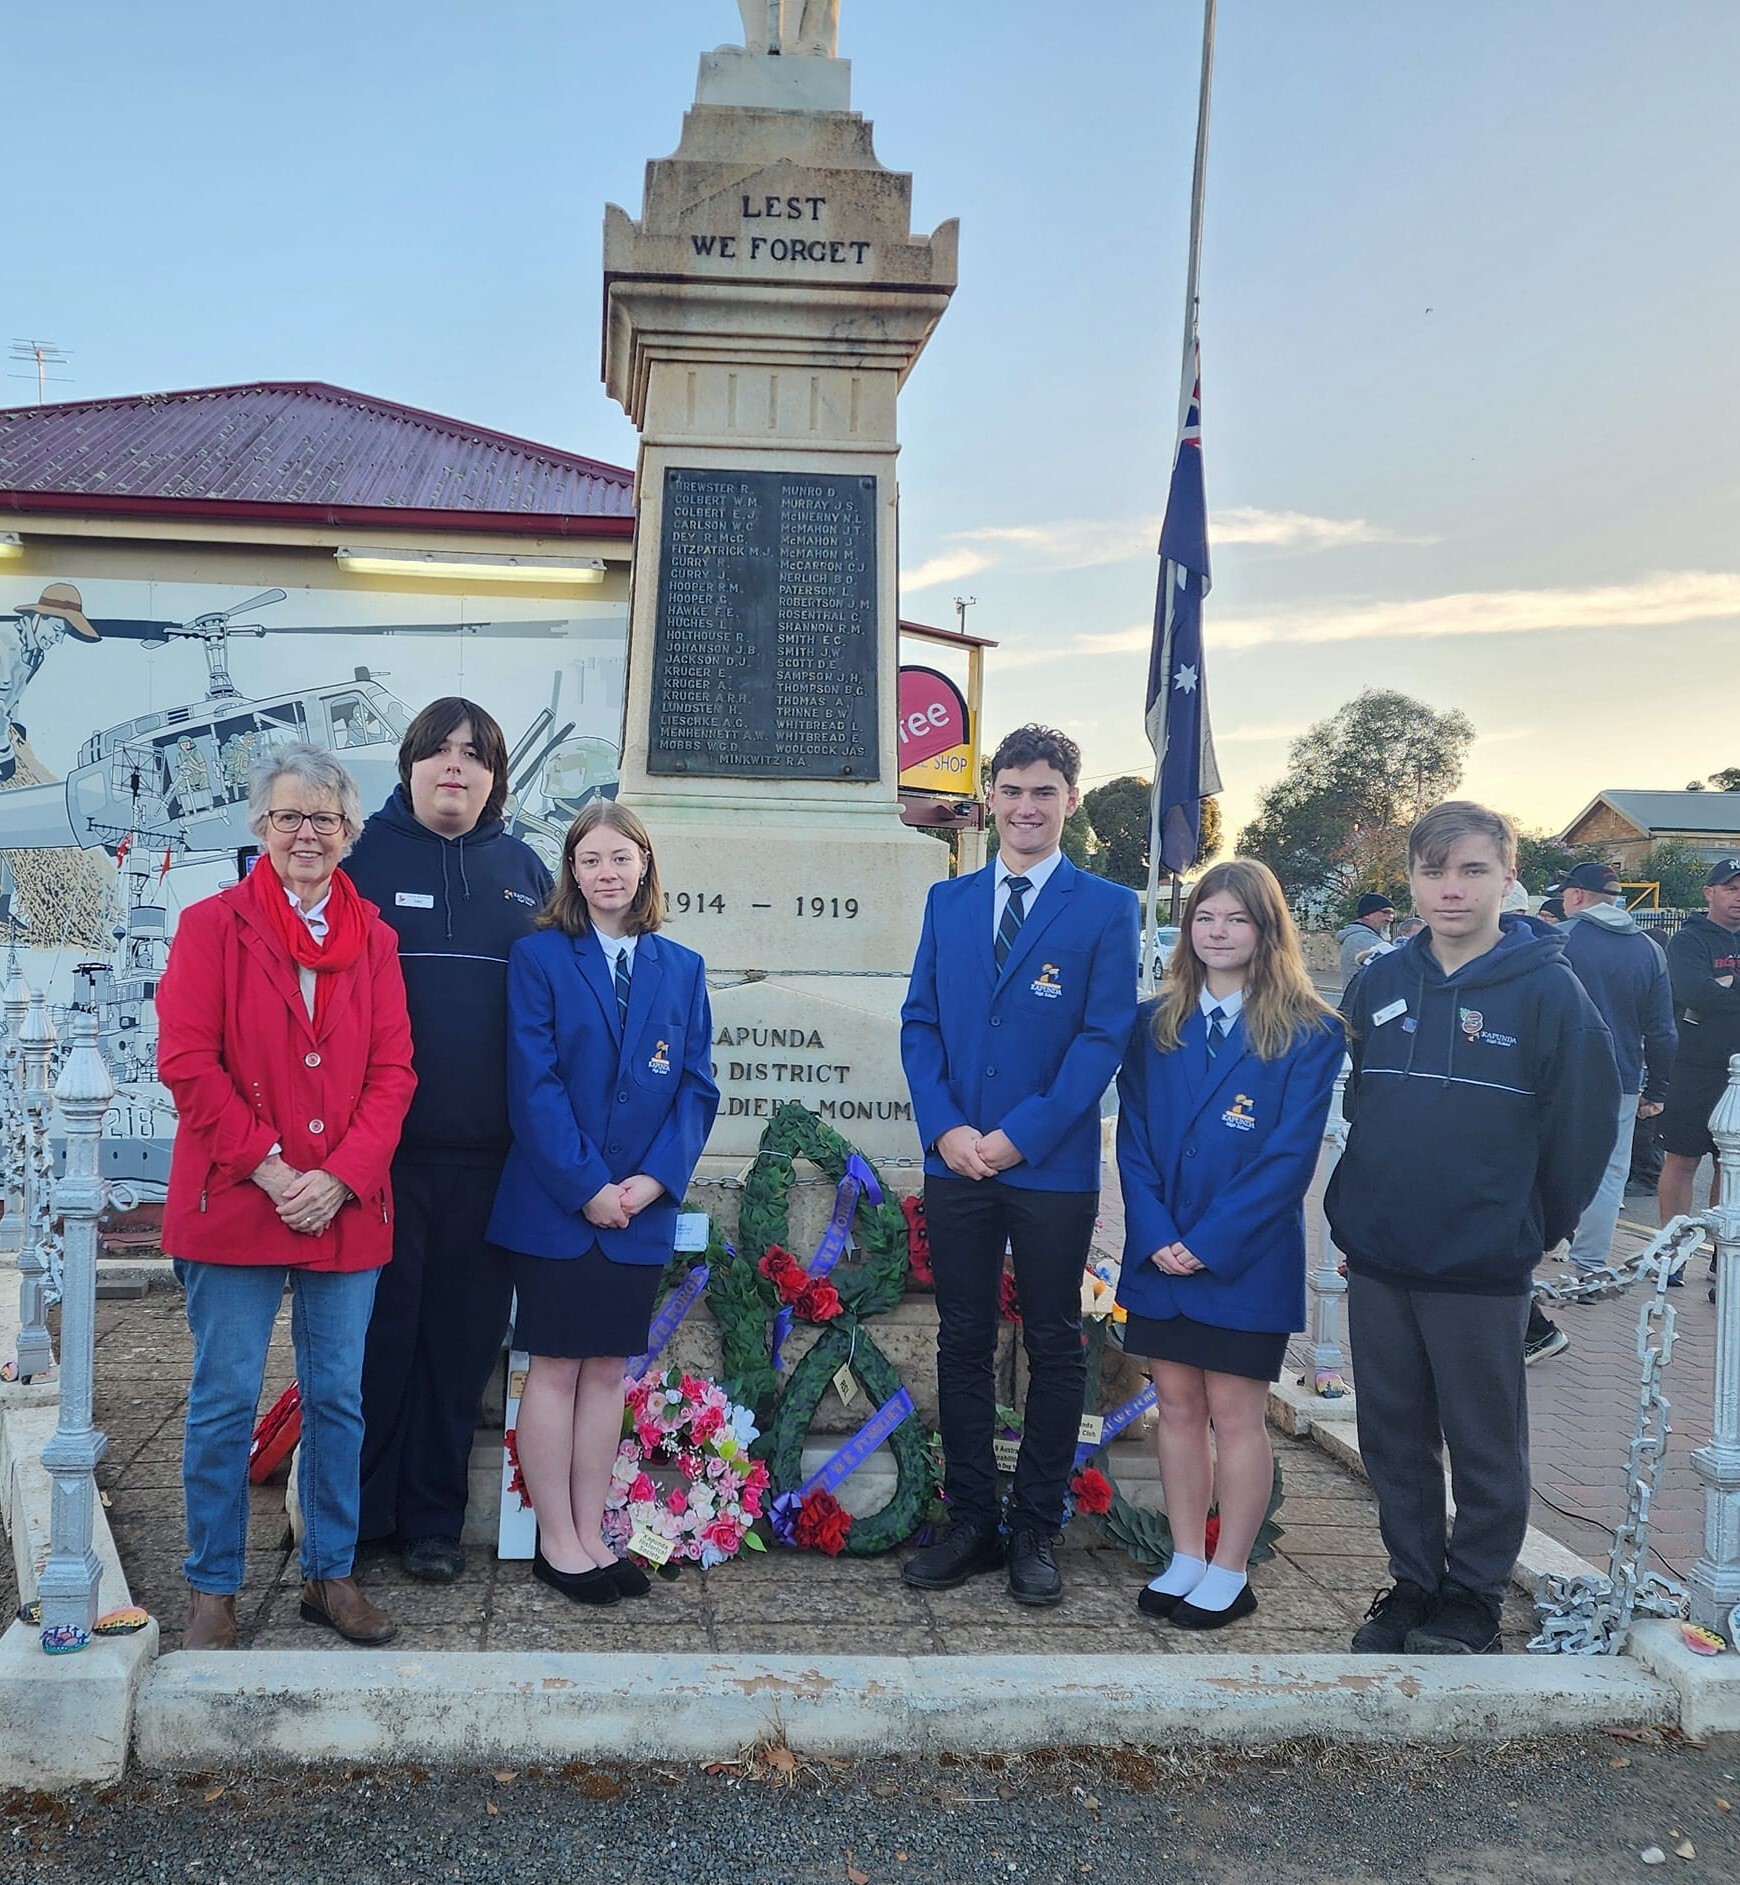 Kapunda ANZAC Day